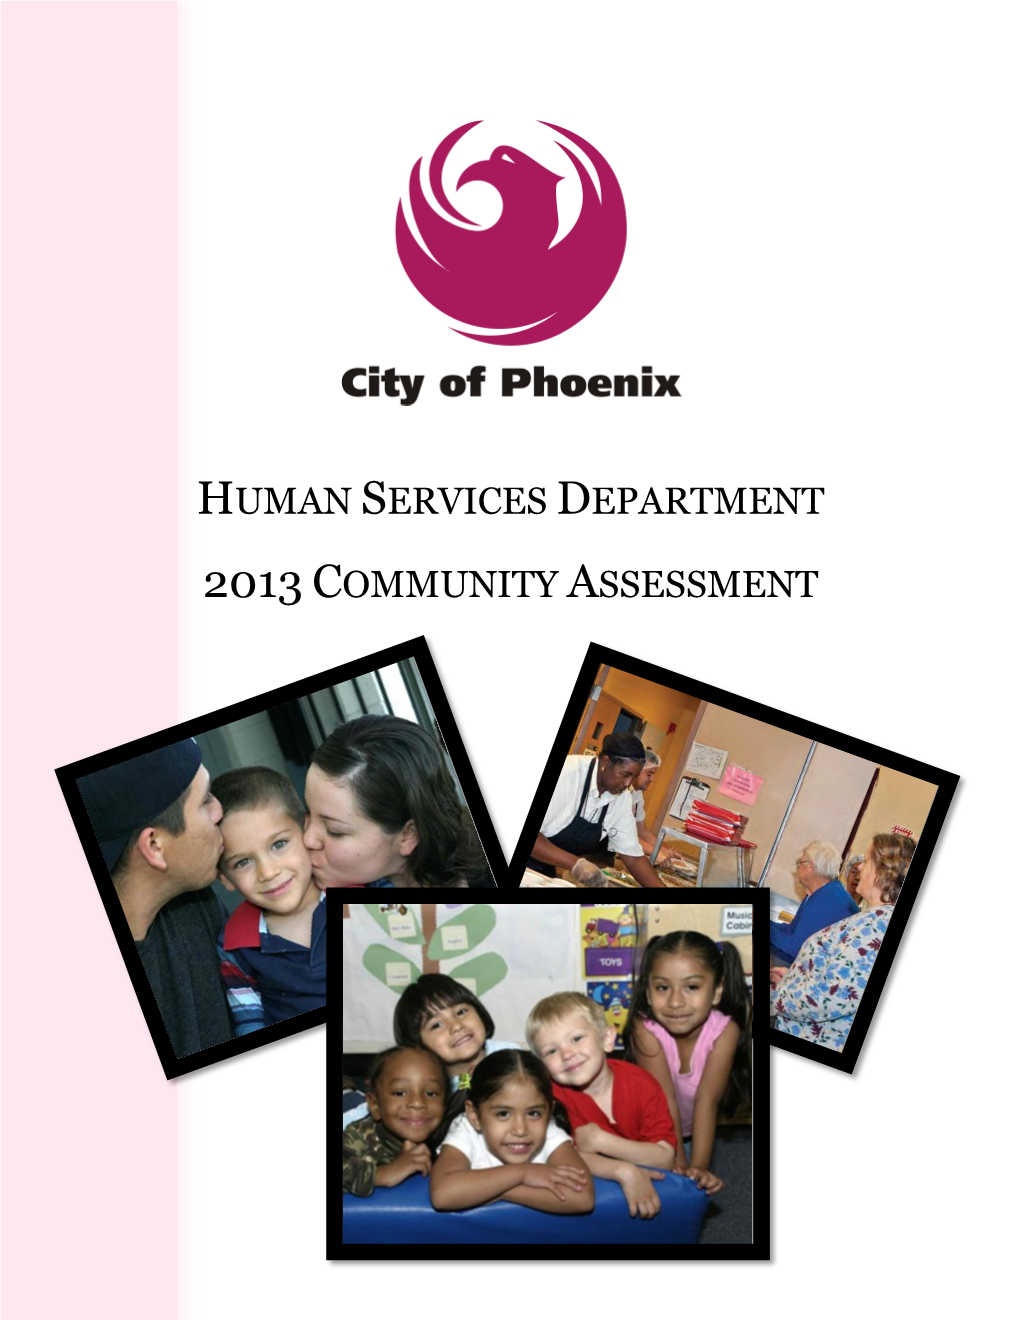 Human Services Department 2013 Community Assessment